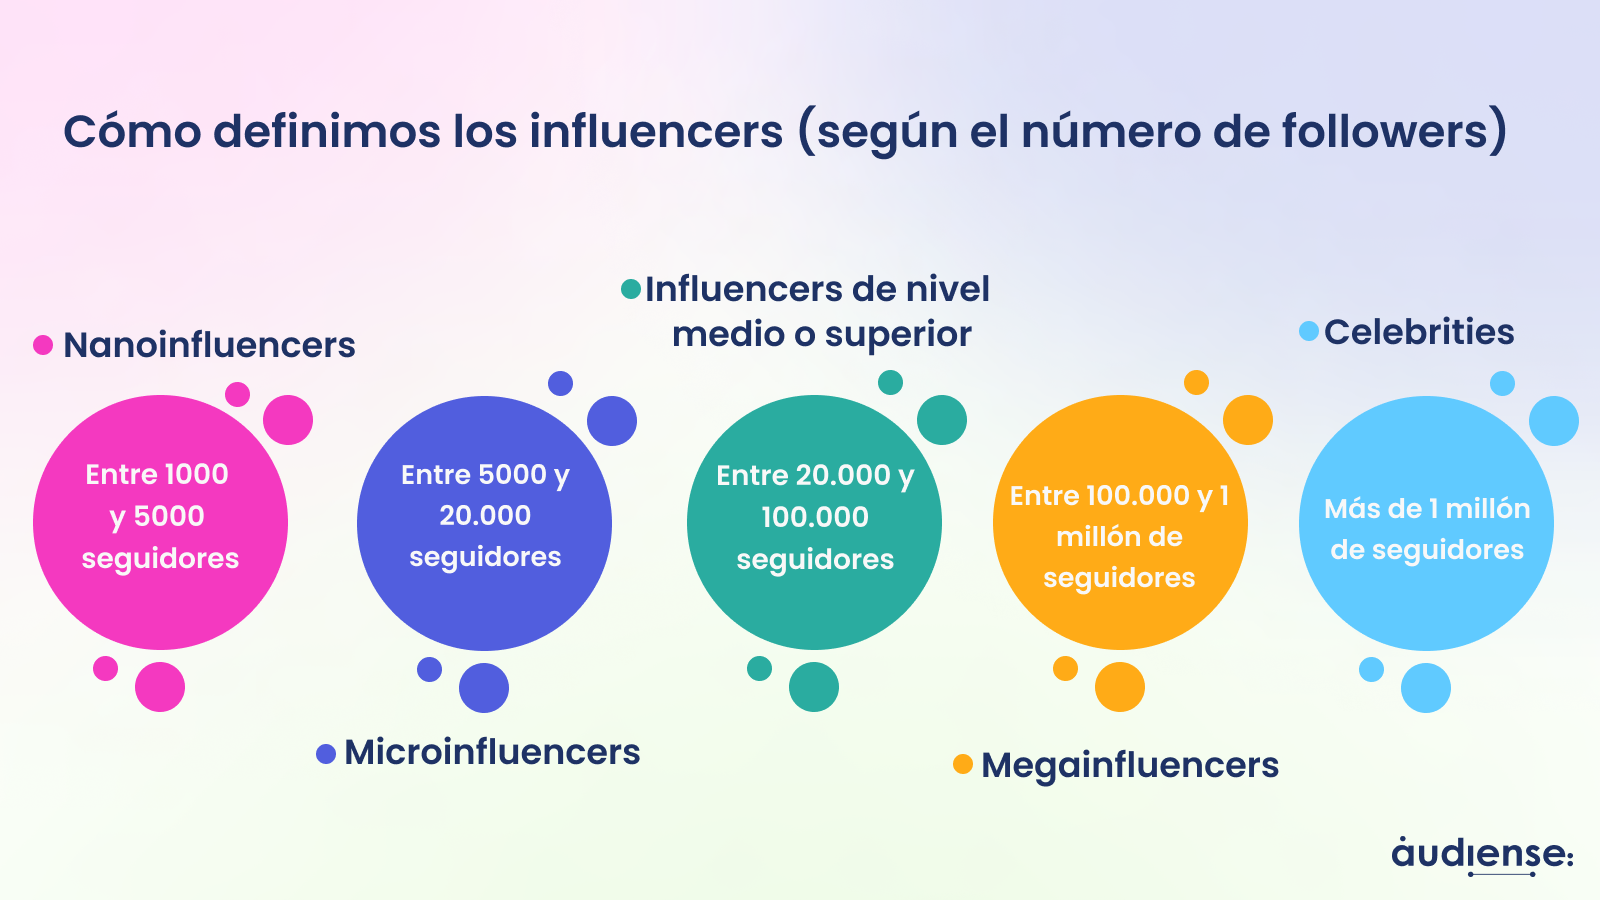 Audiense blog - Influencers según número de followers